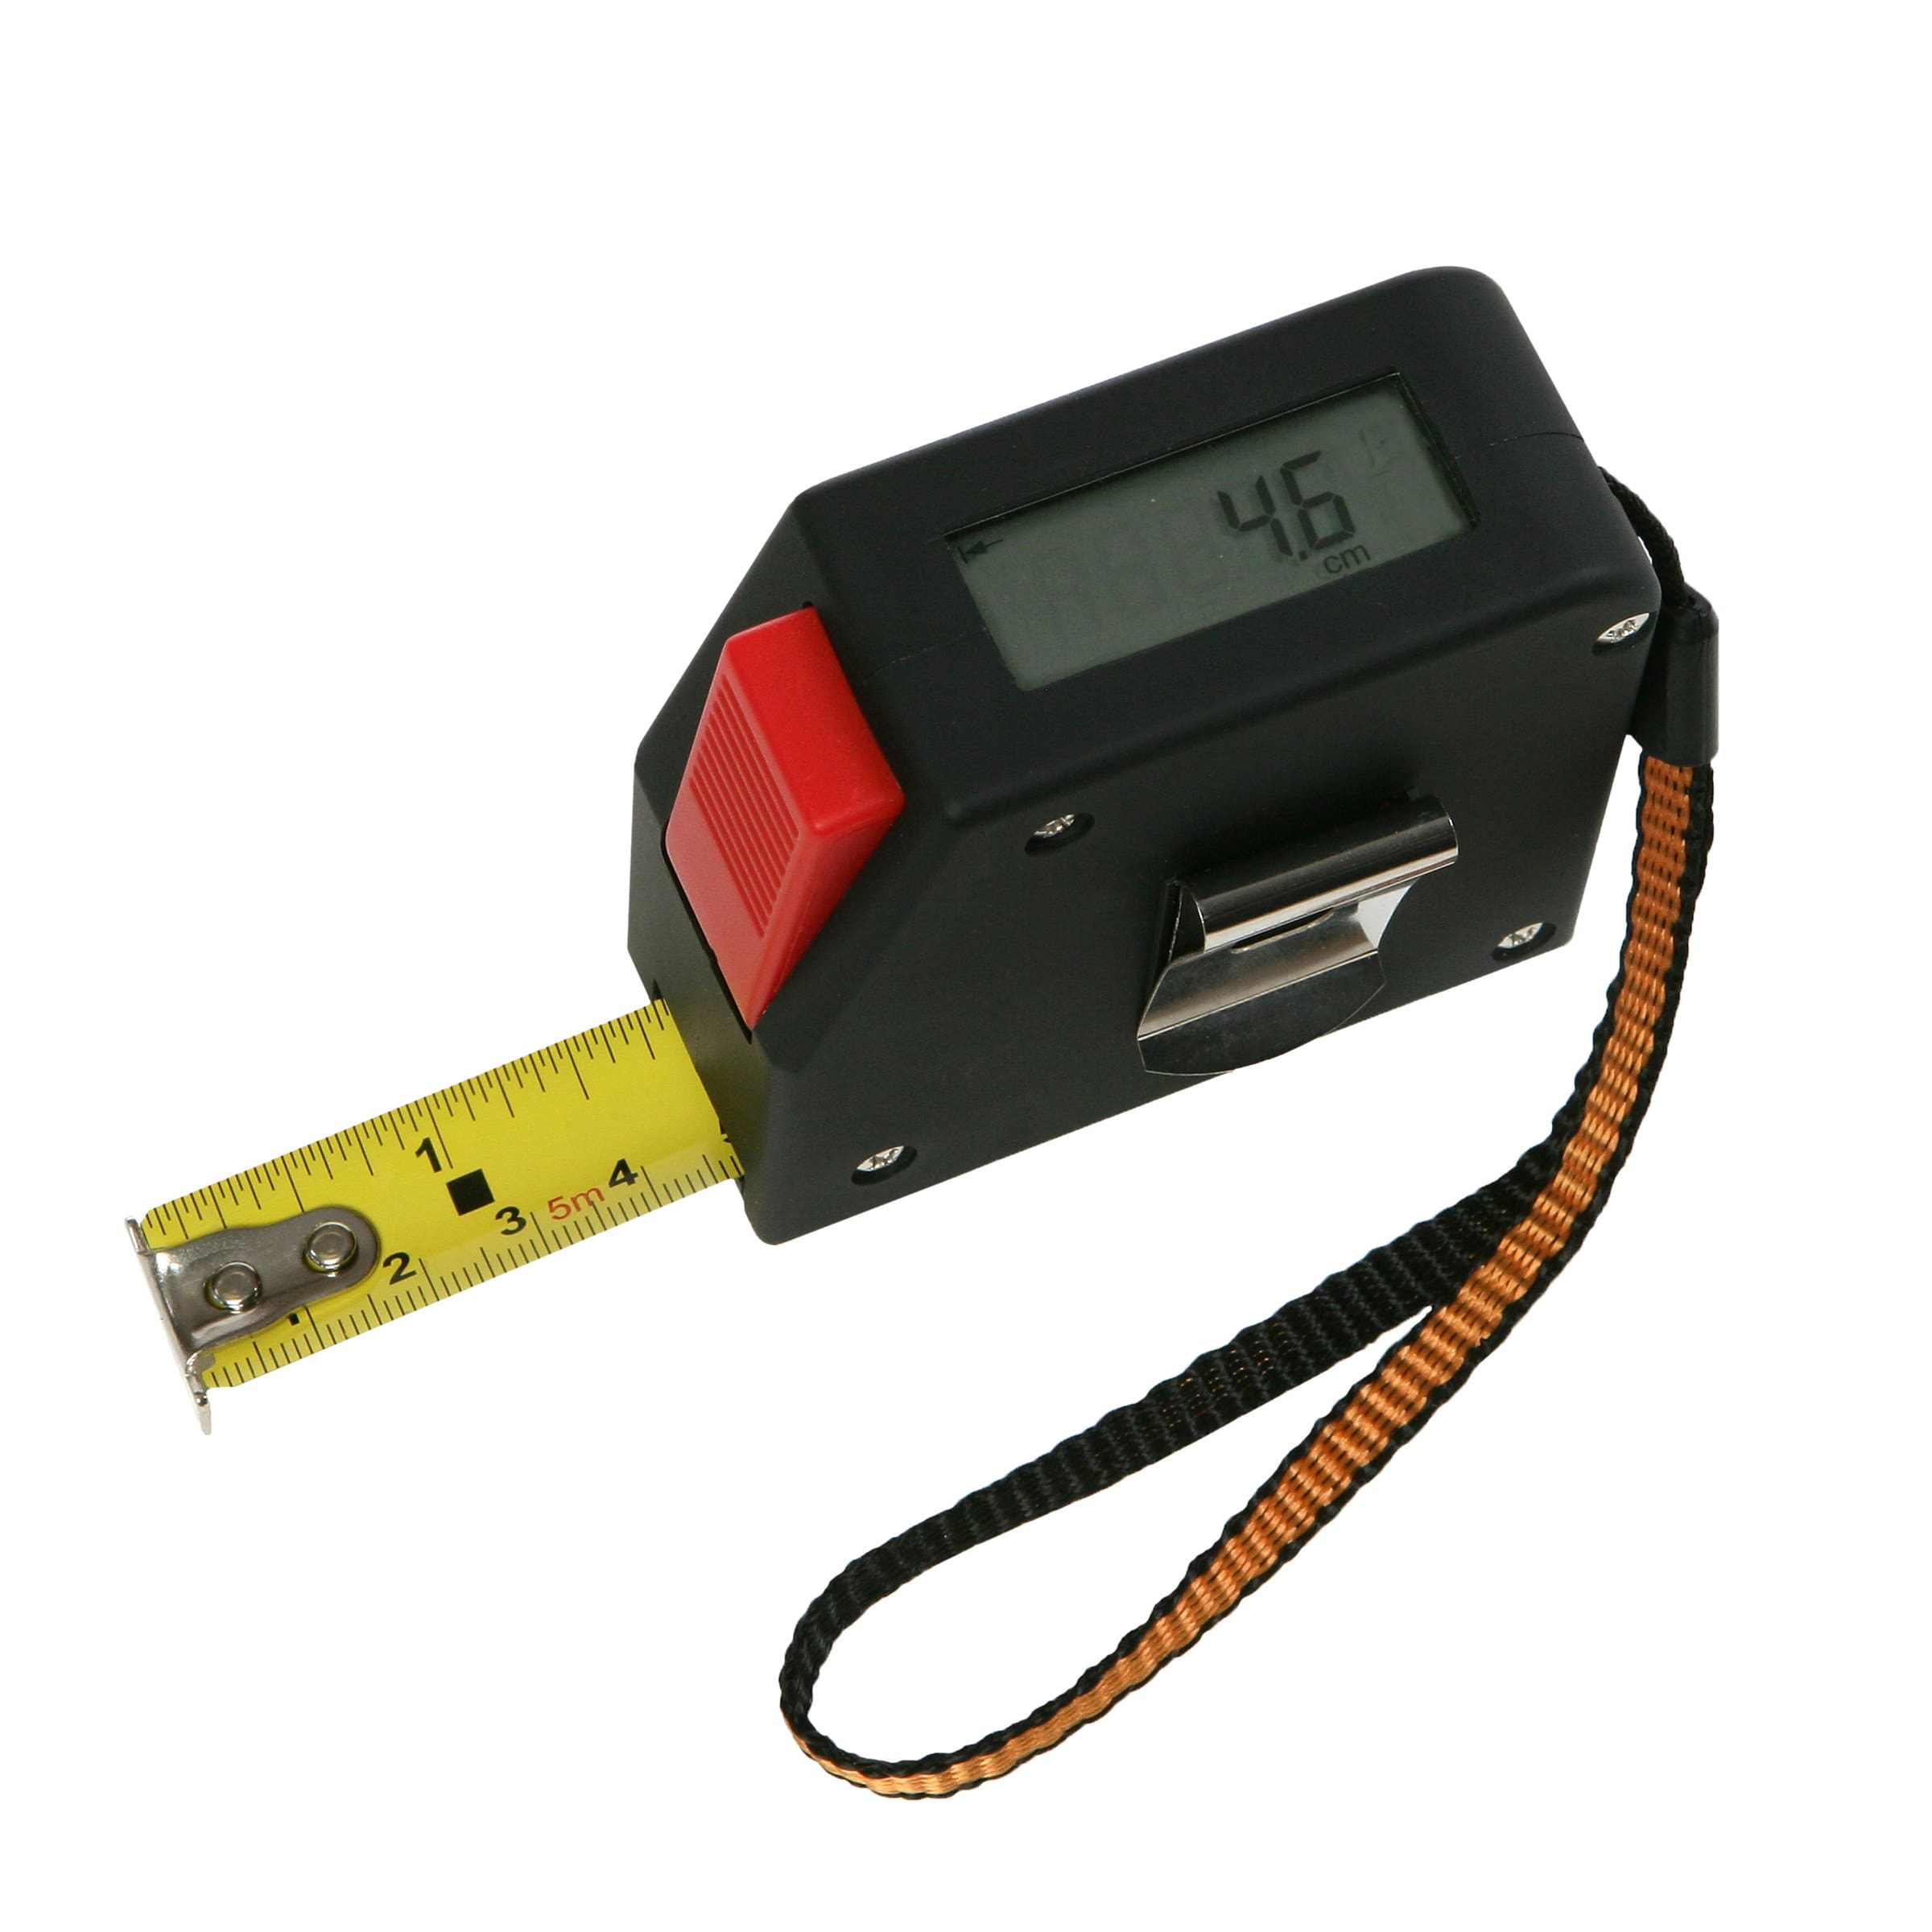 Sutowe Measuring Tape Clip Precision Tape Measuring Tool Stainless